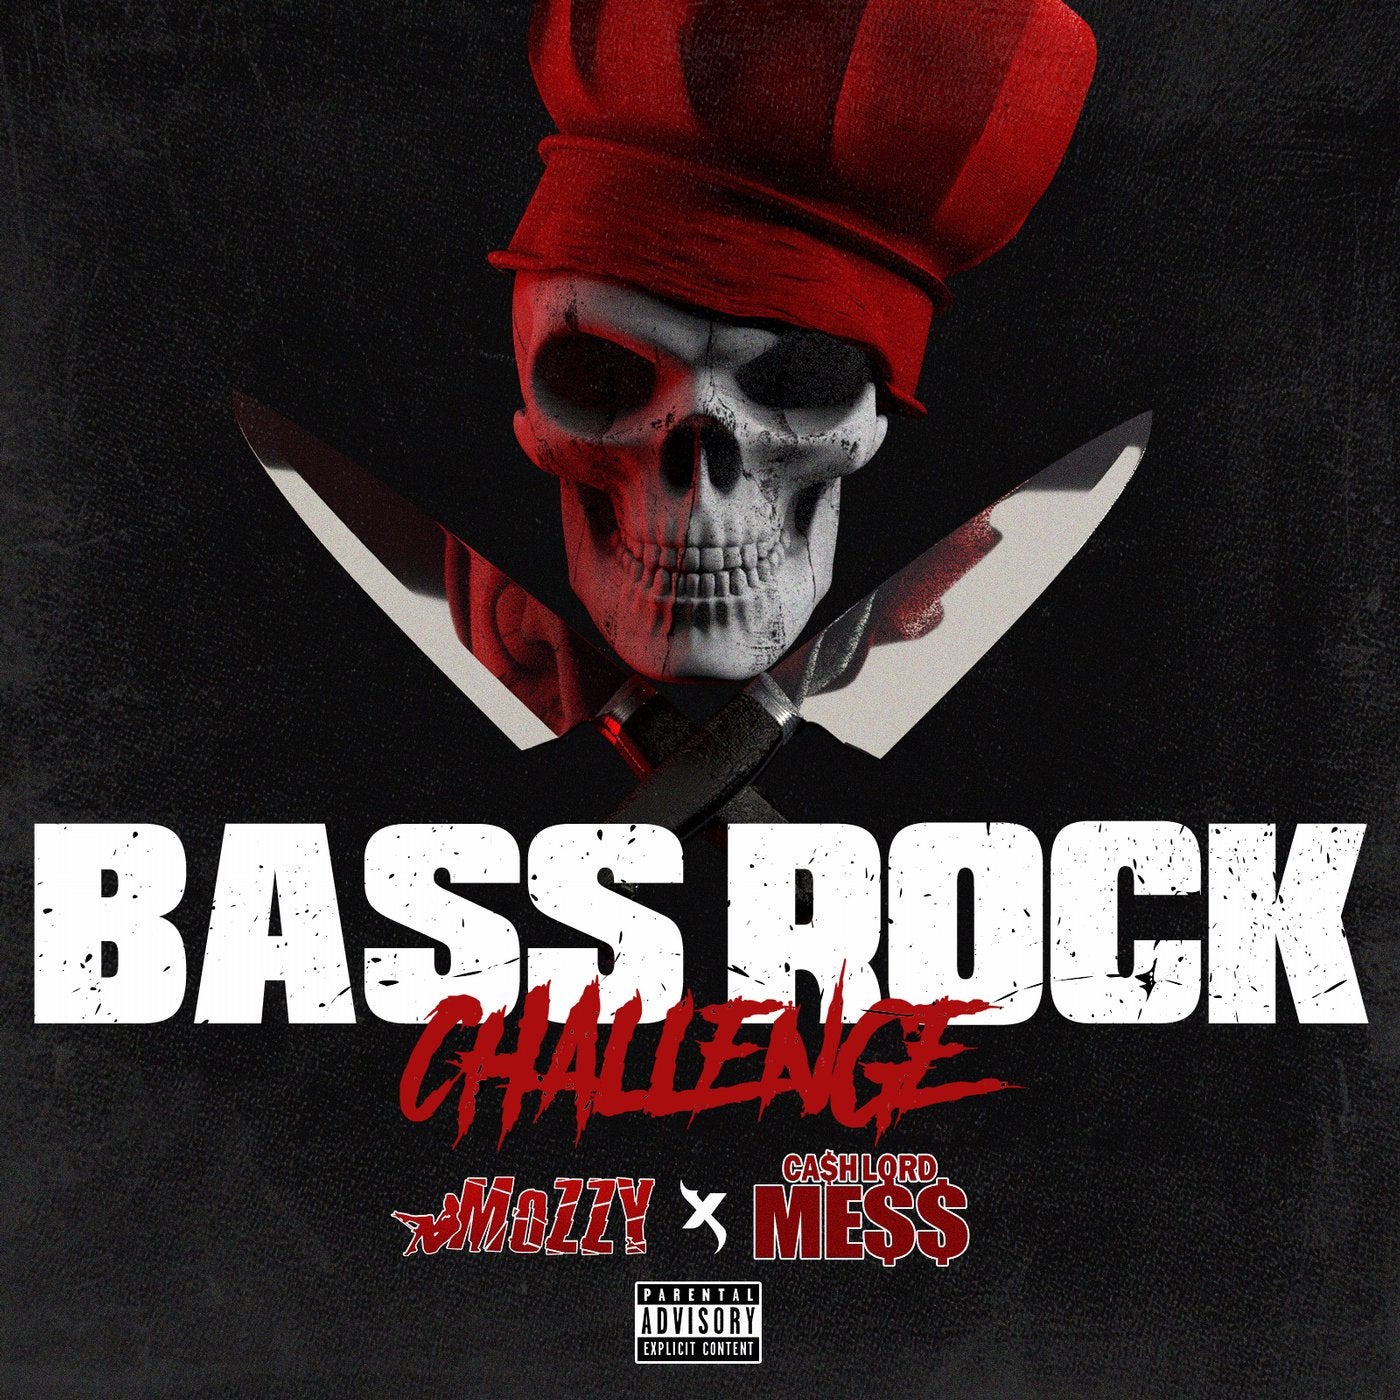 Bass Rock Challenge